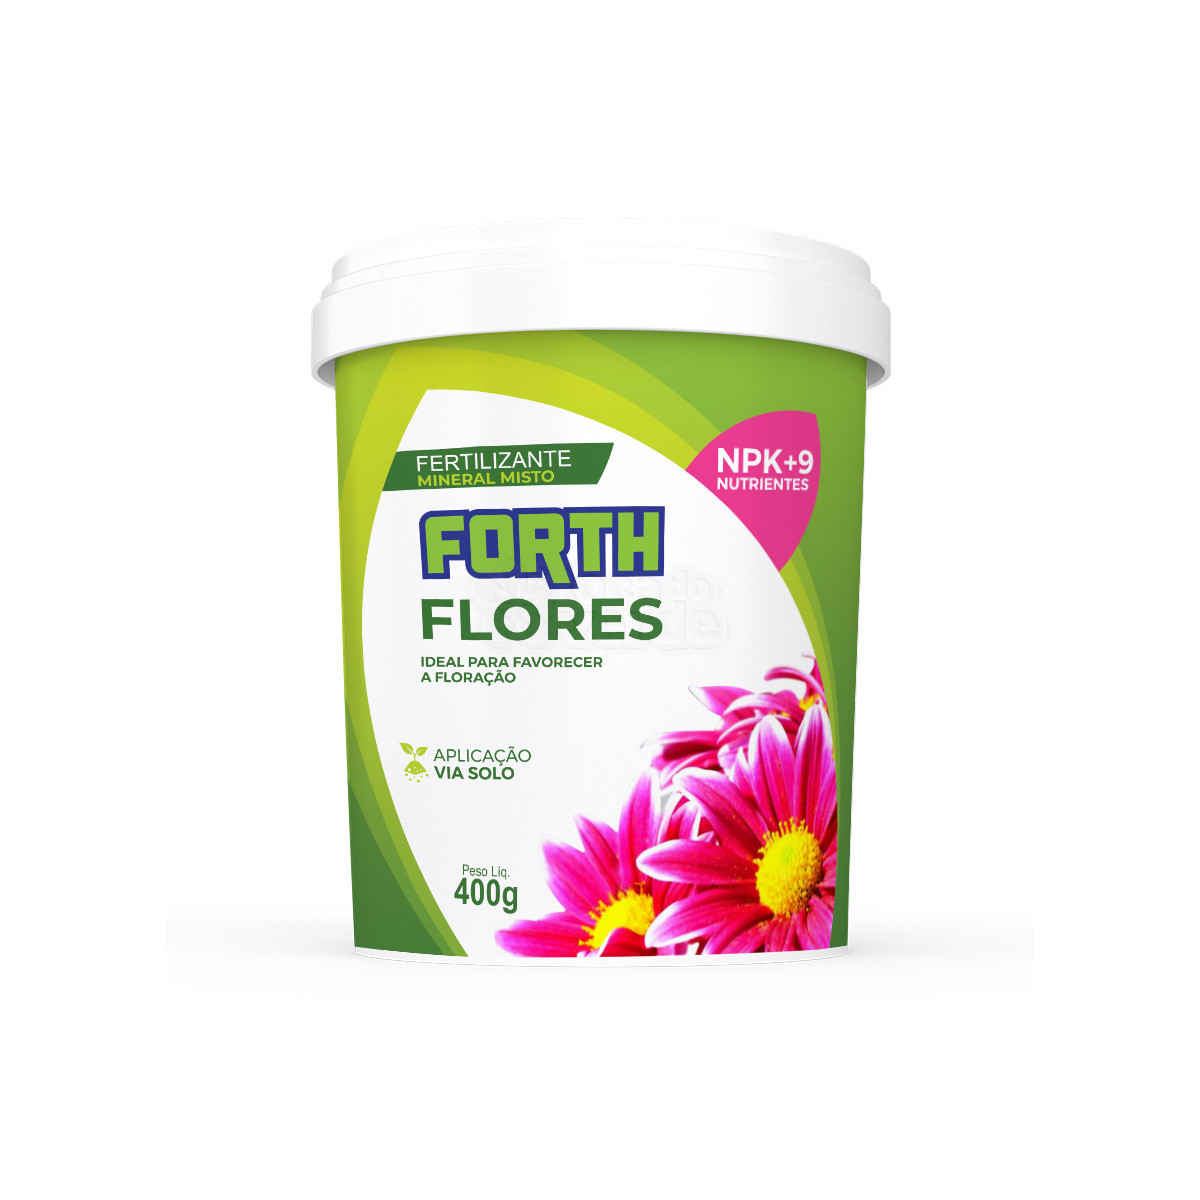 Forth Flores - Fertilizante NPK 06-18-12 + 9 Nutrientes